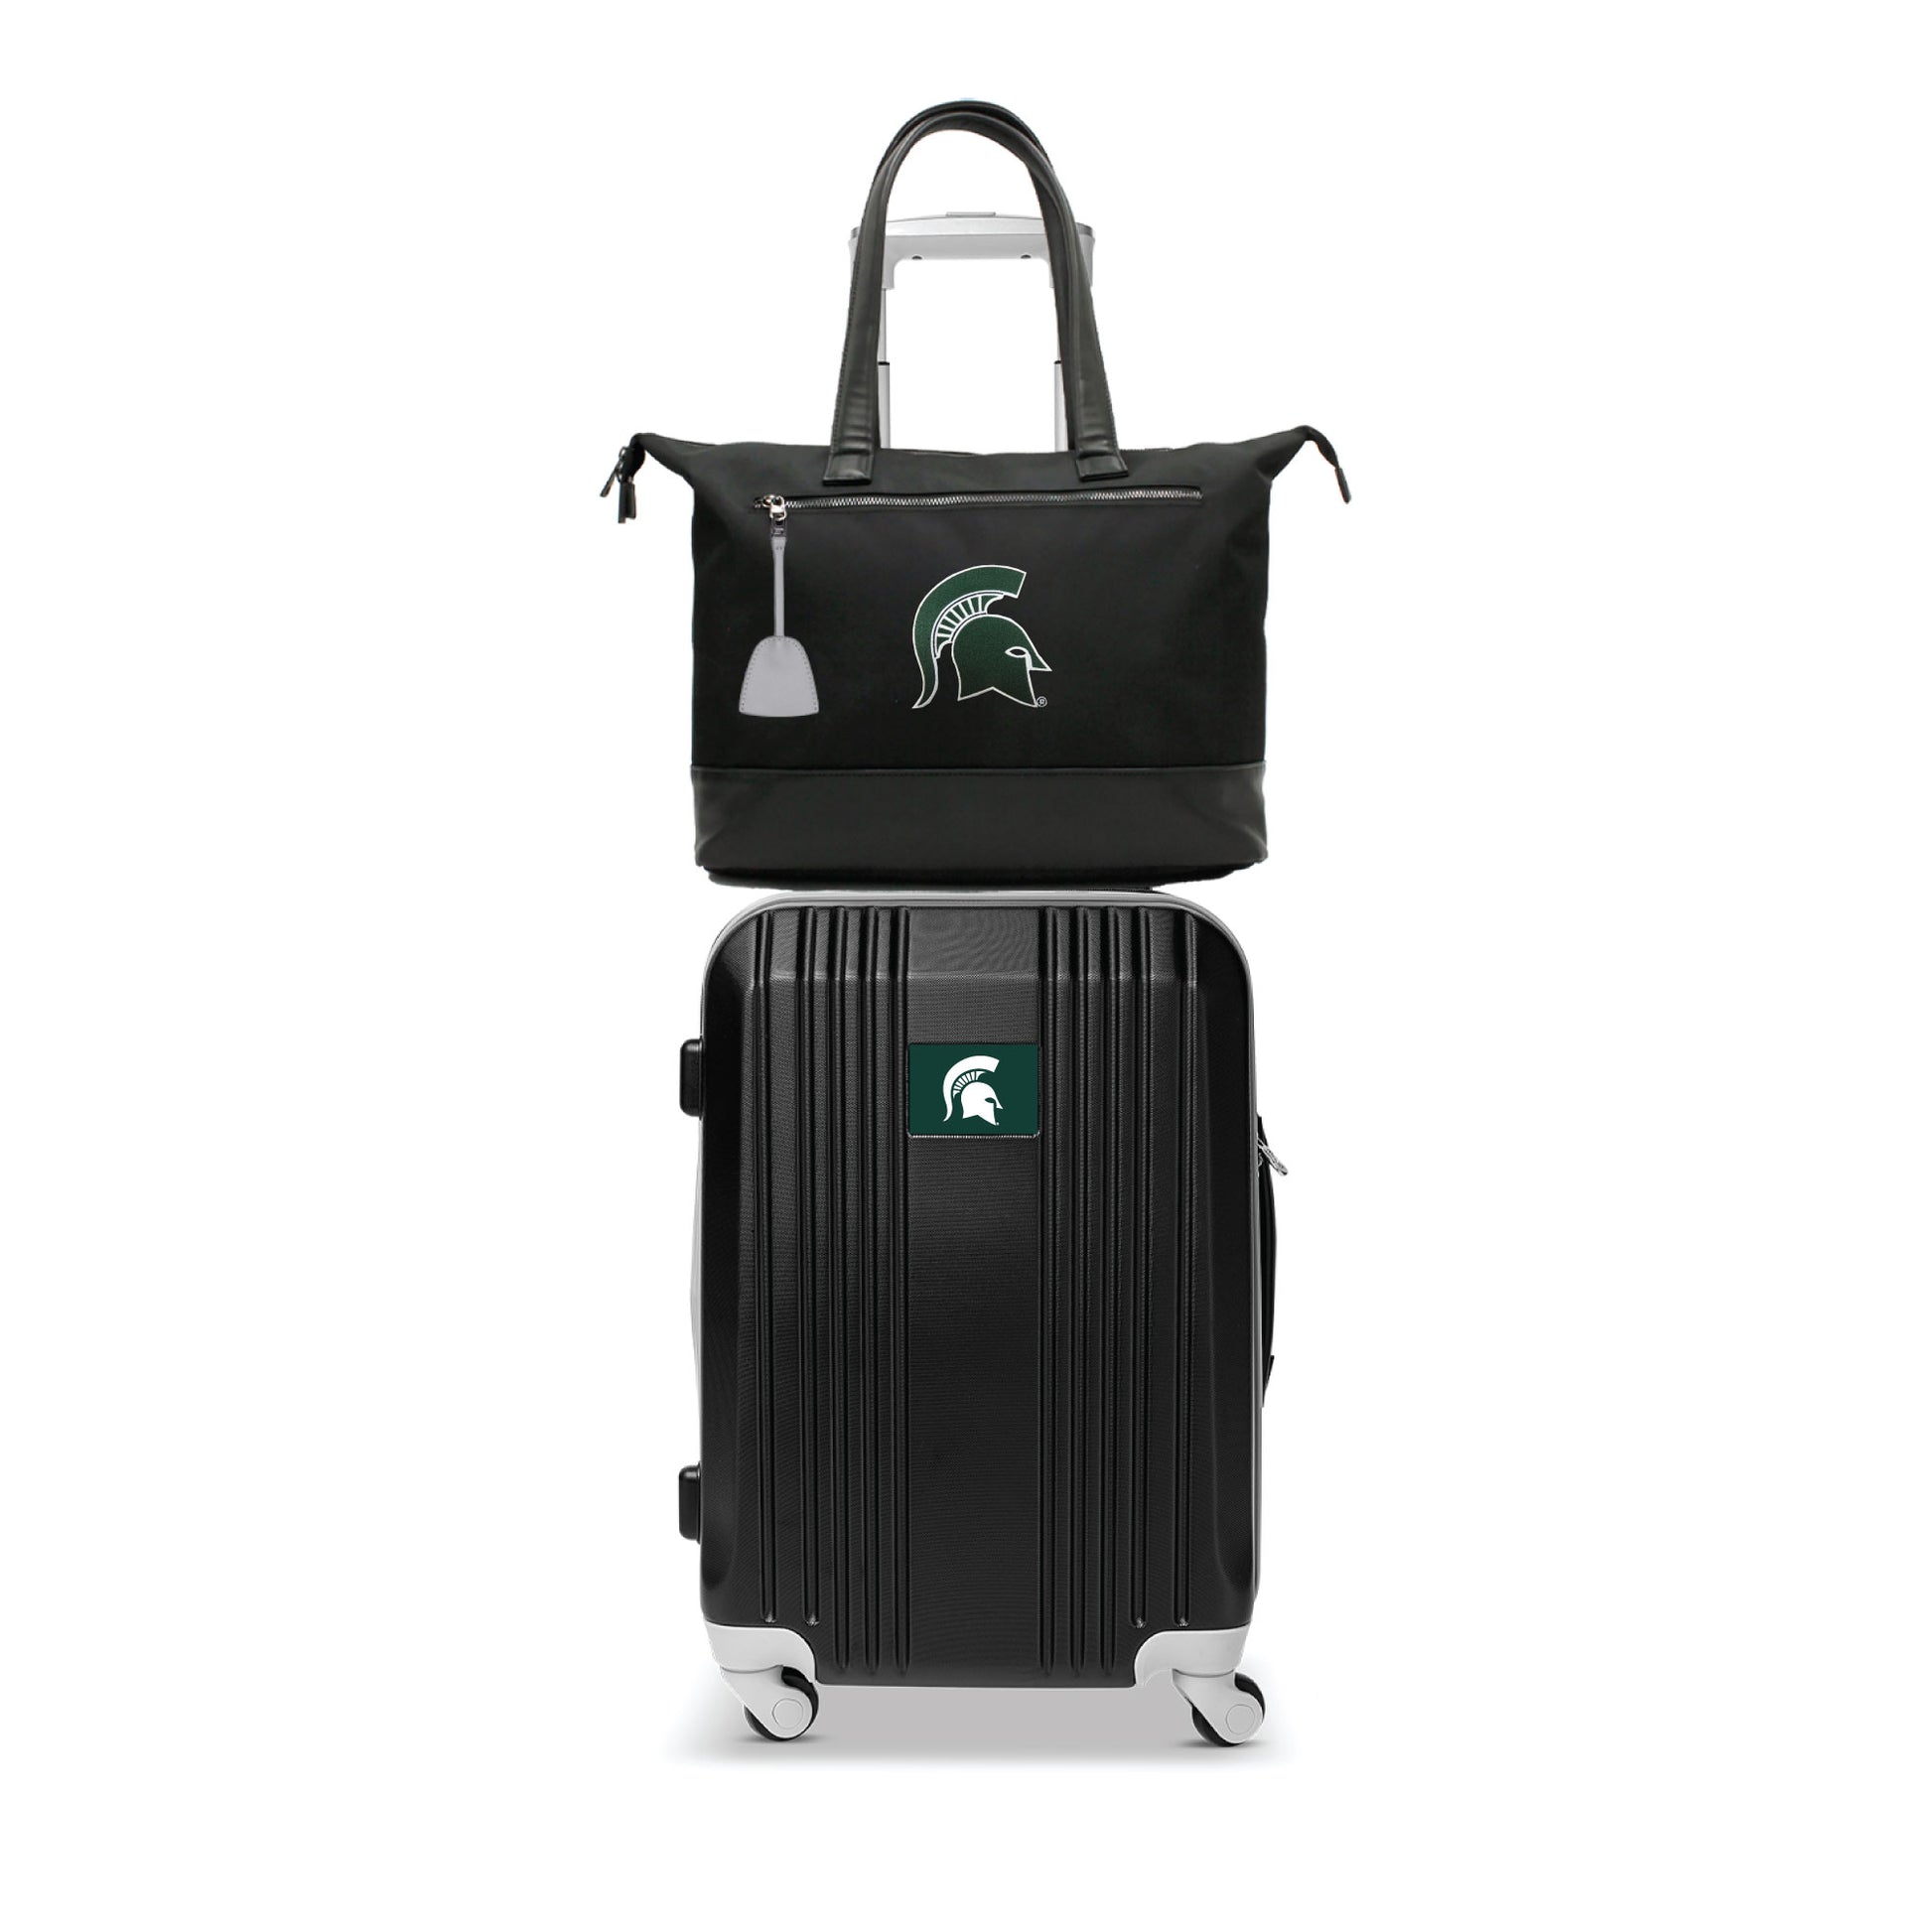 Michigan State Spartans Premium Laptop Tote Bag and Luggage Set